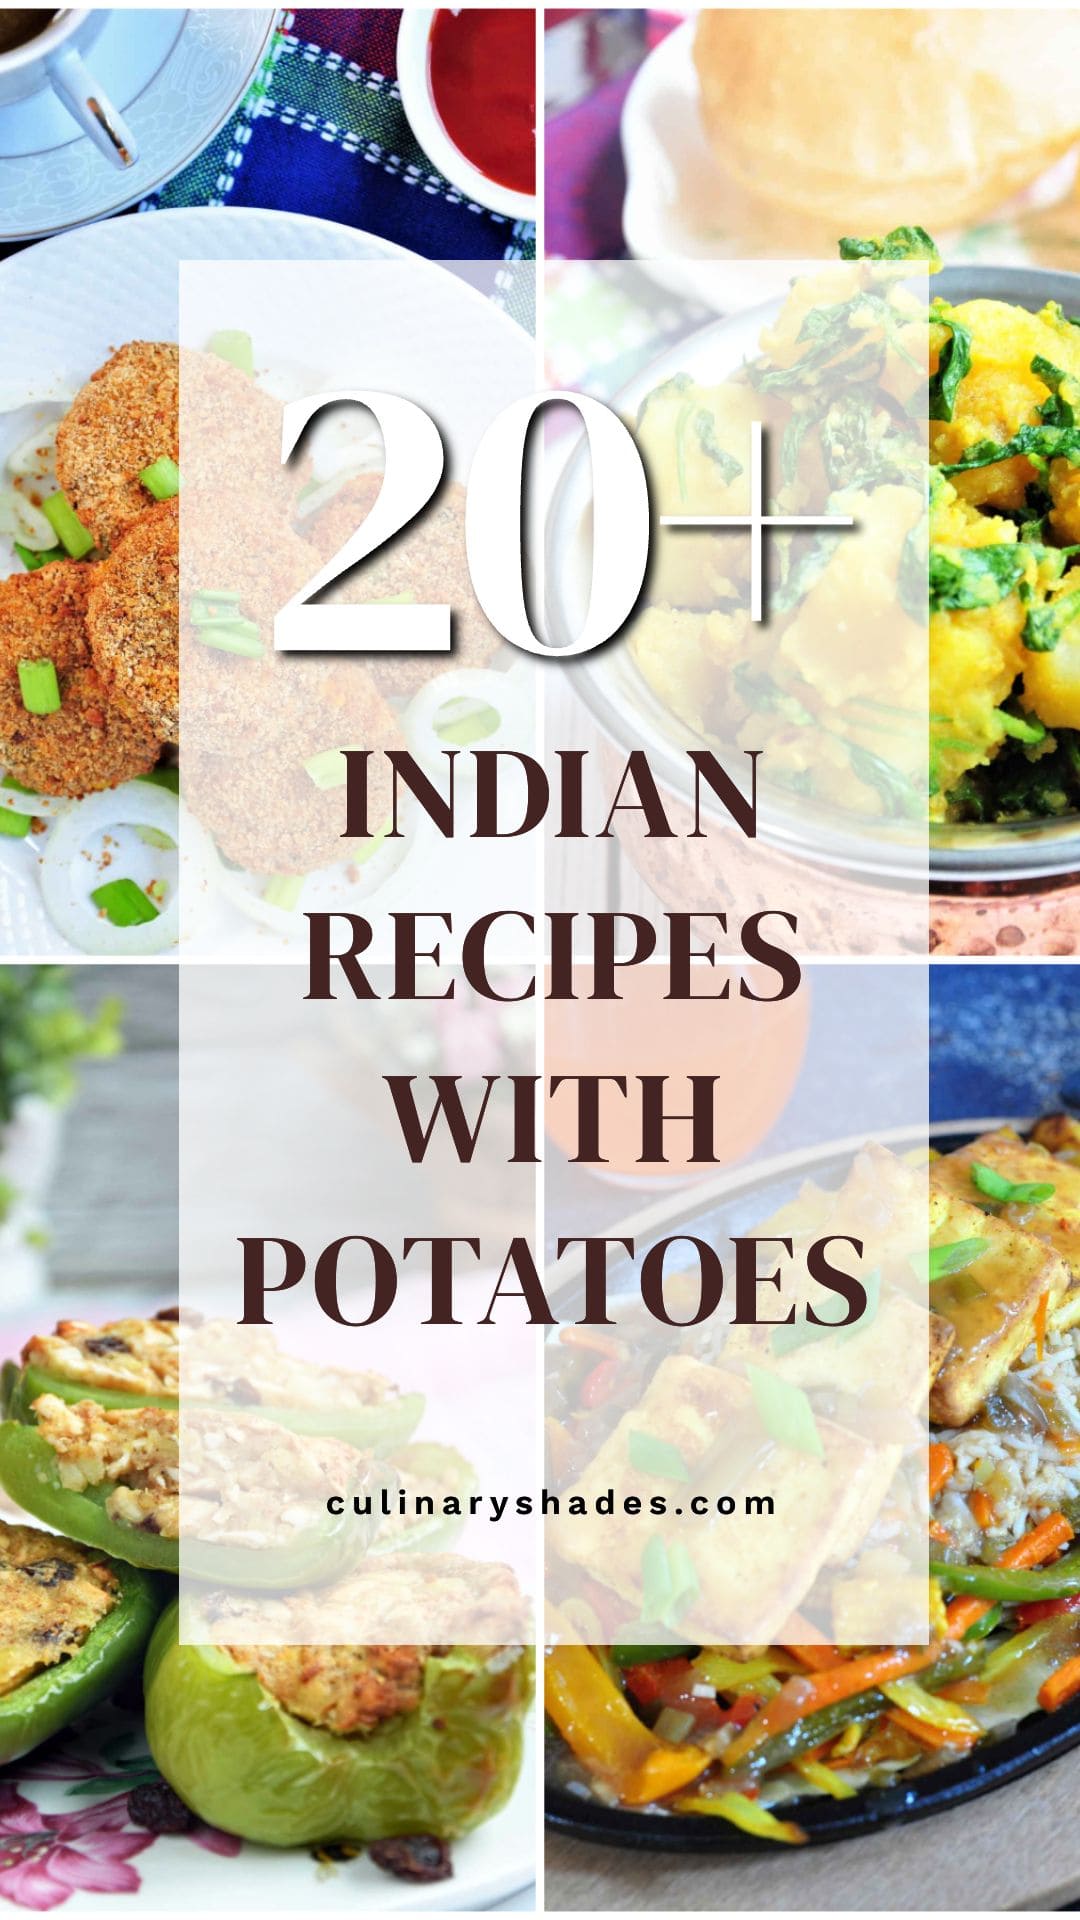 Indian potato recipes.